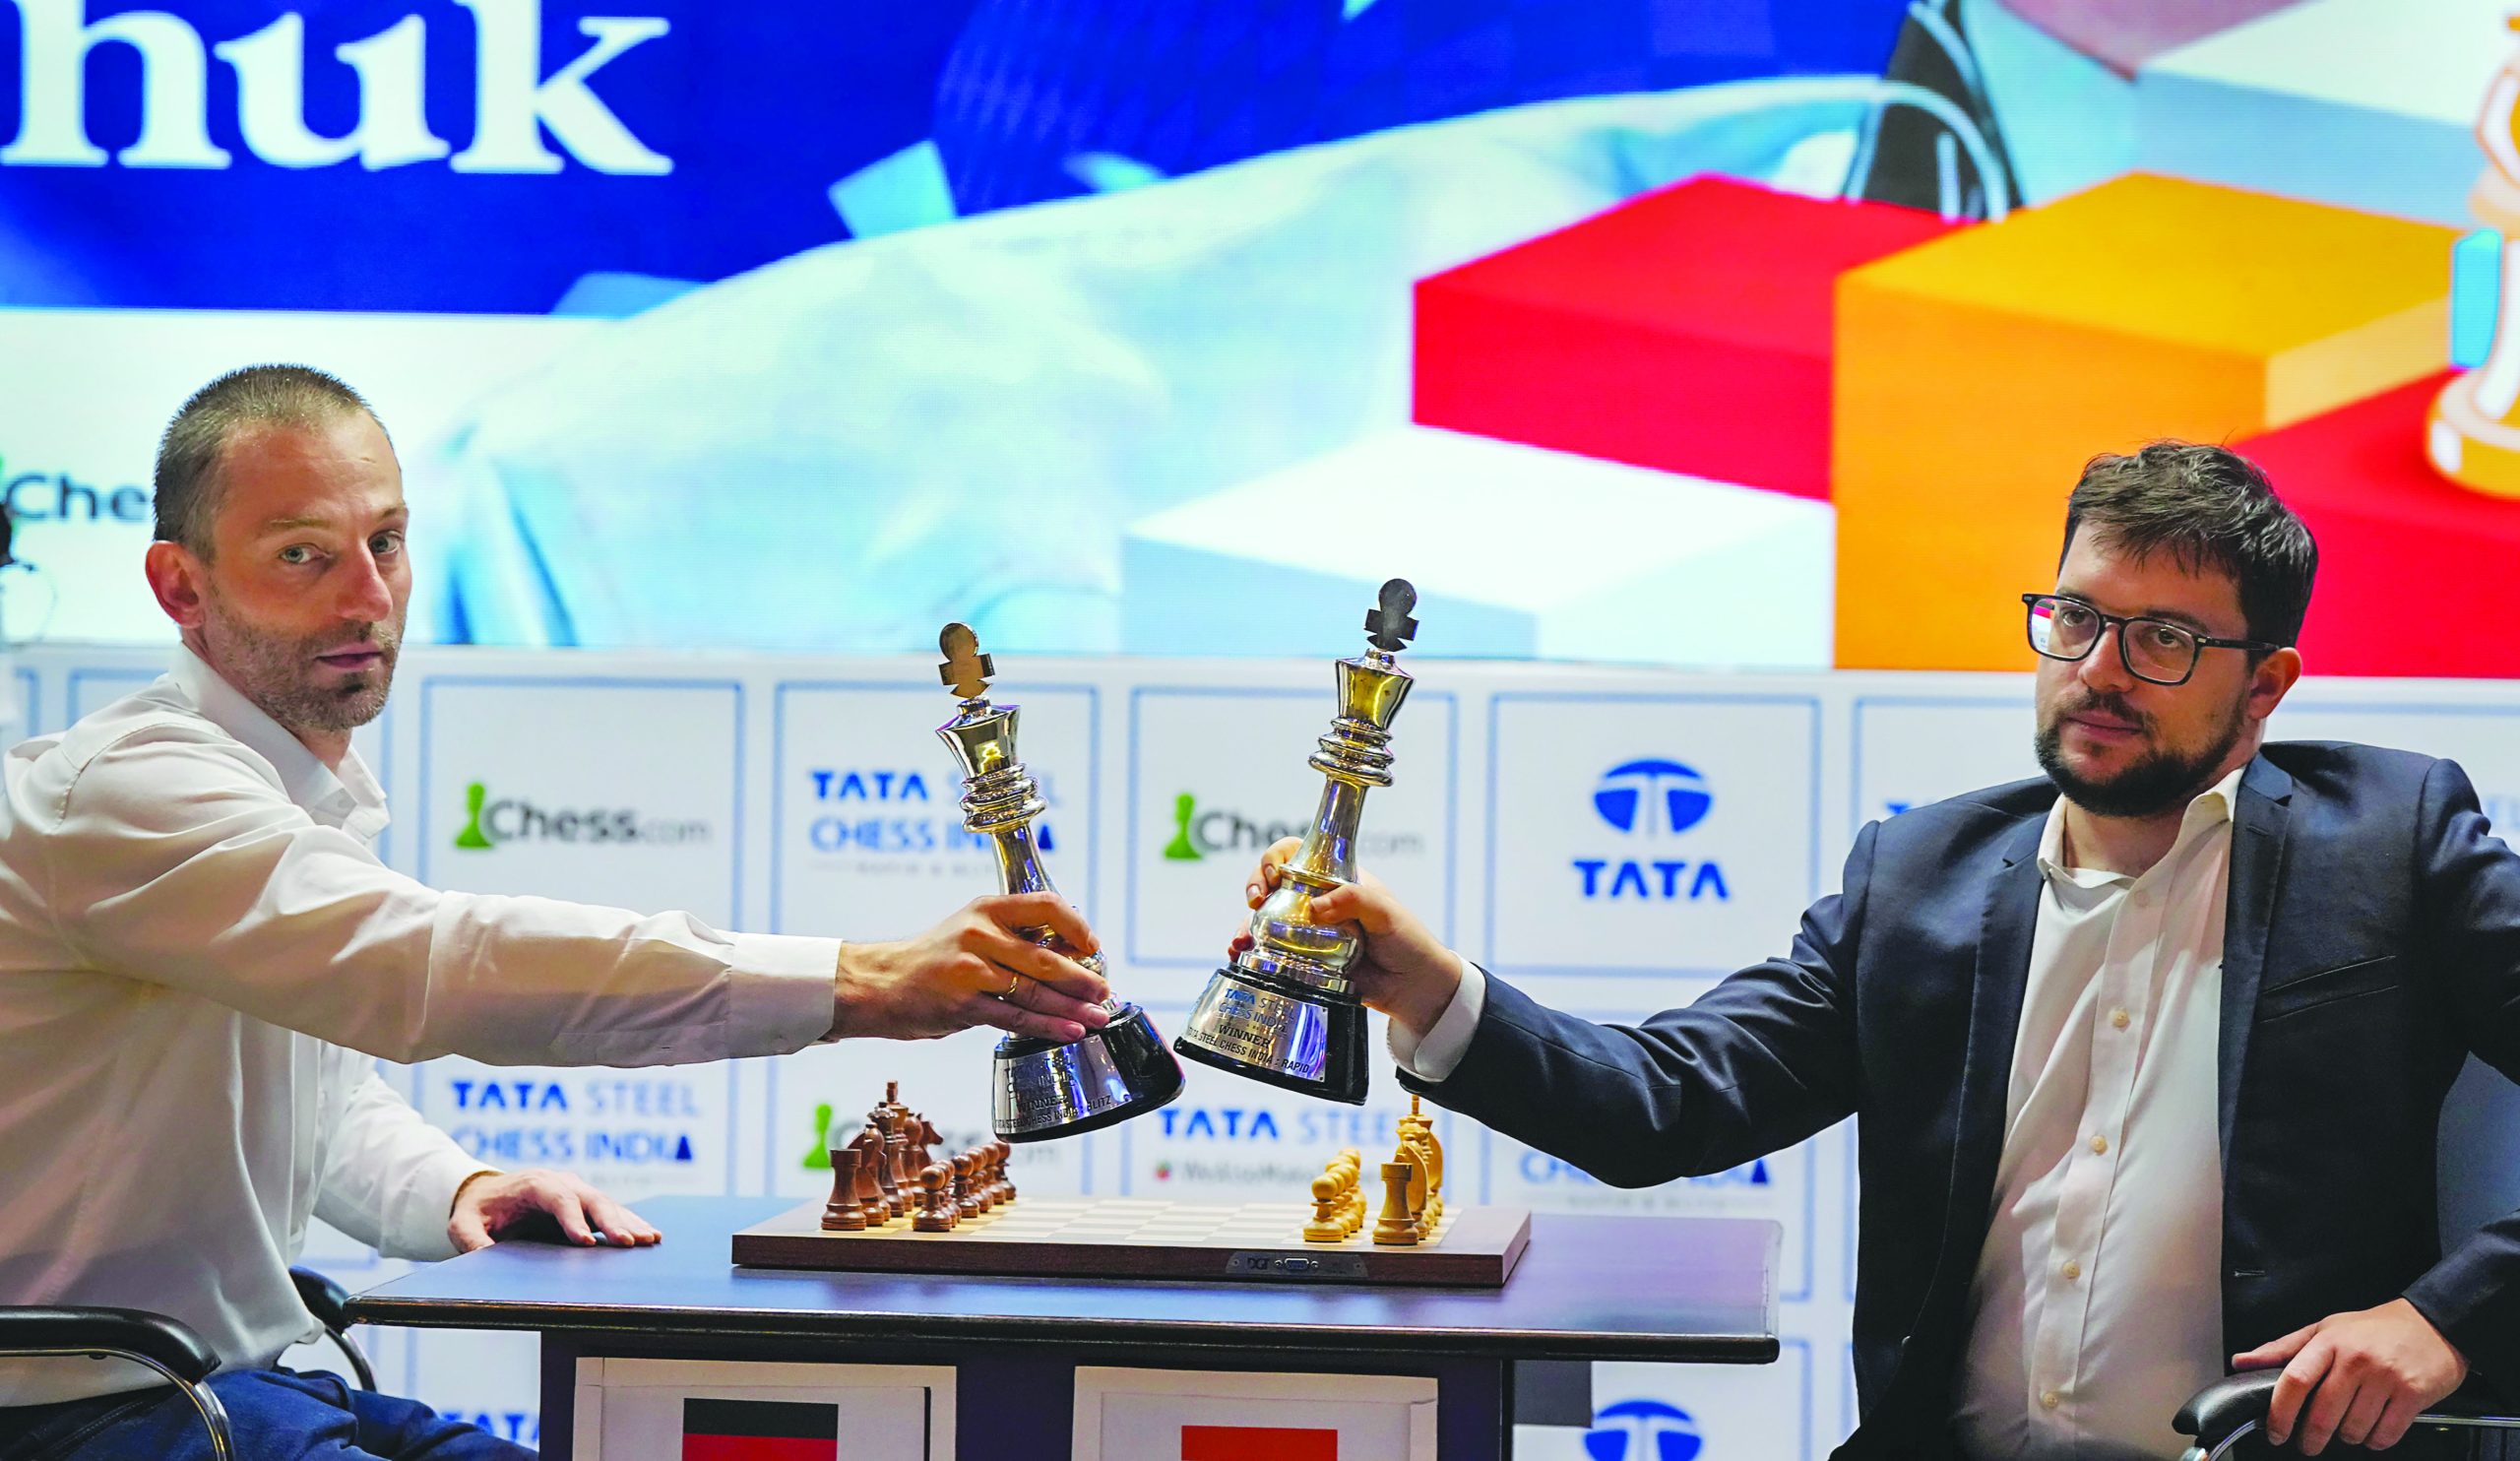 Tata Steel Chess India Rapid & Blitz 2023 - The Shillong Times